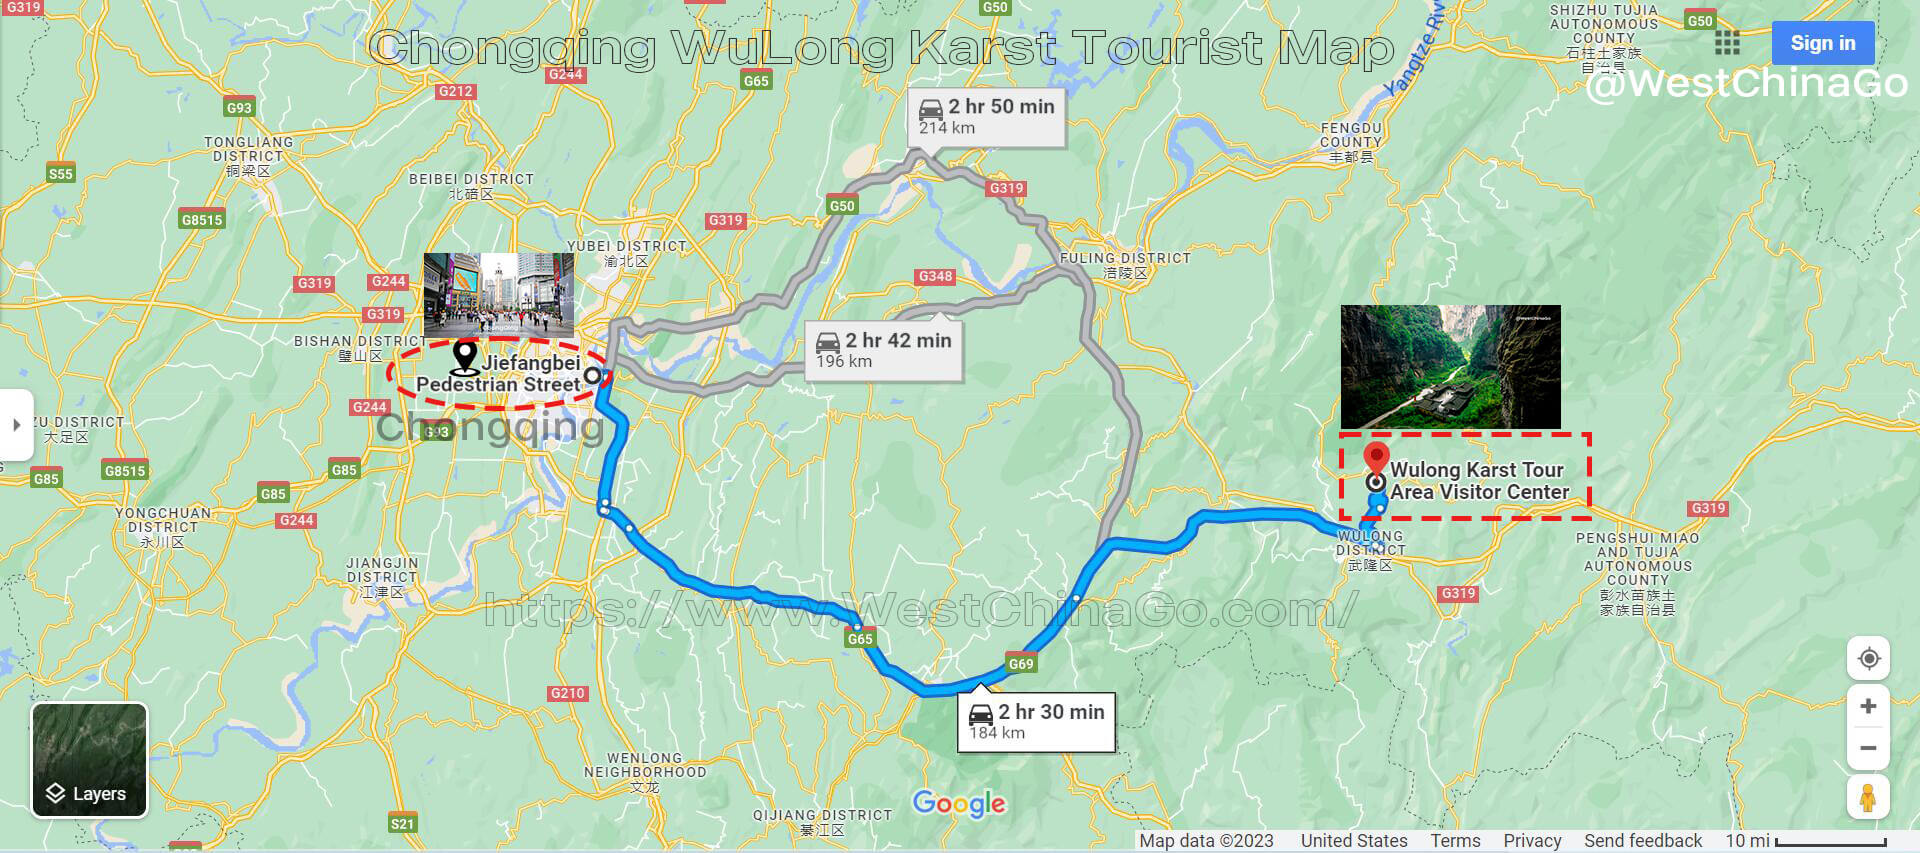 Chongqing Wulong Karst Tourist Map